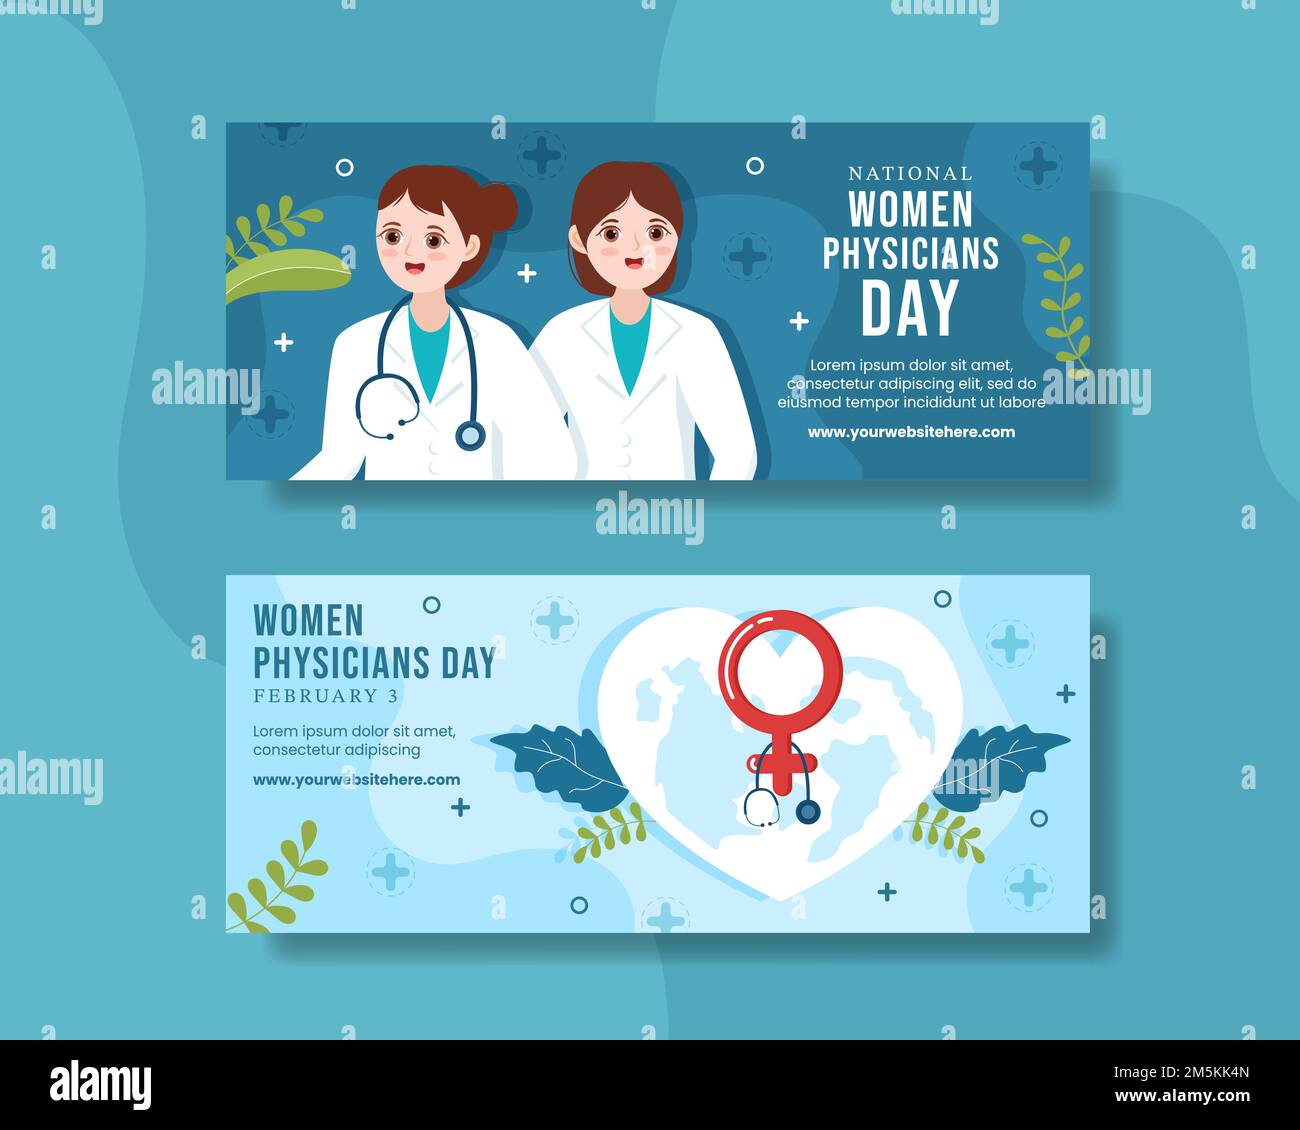 National Women Physicians Day Banner Flat Cartoon Hand Drawn Templates Illustration Stock Vector